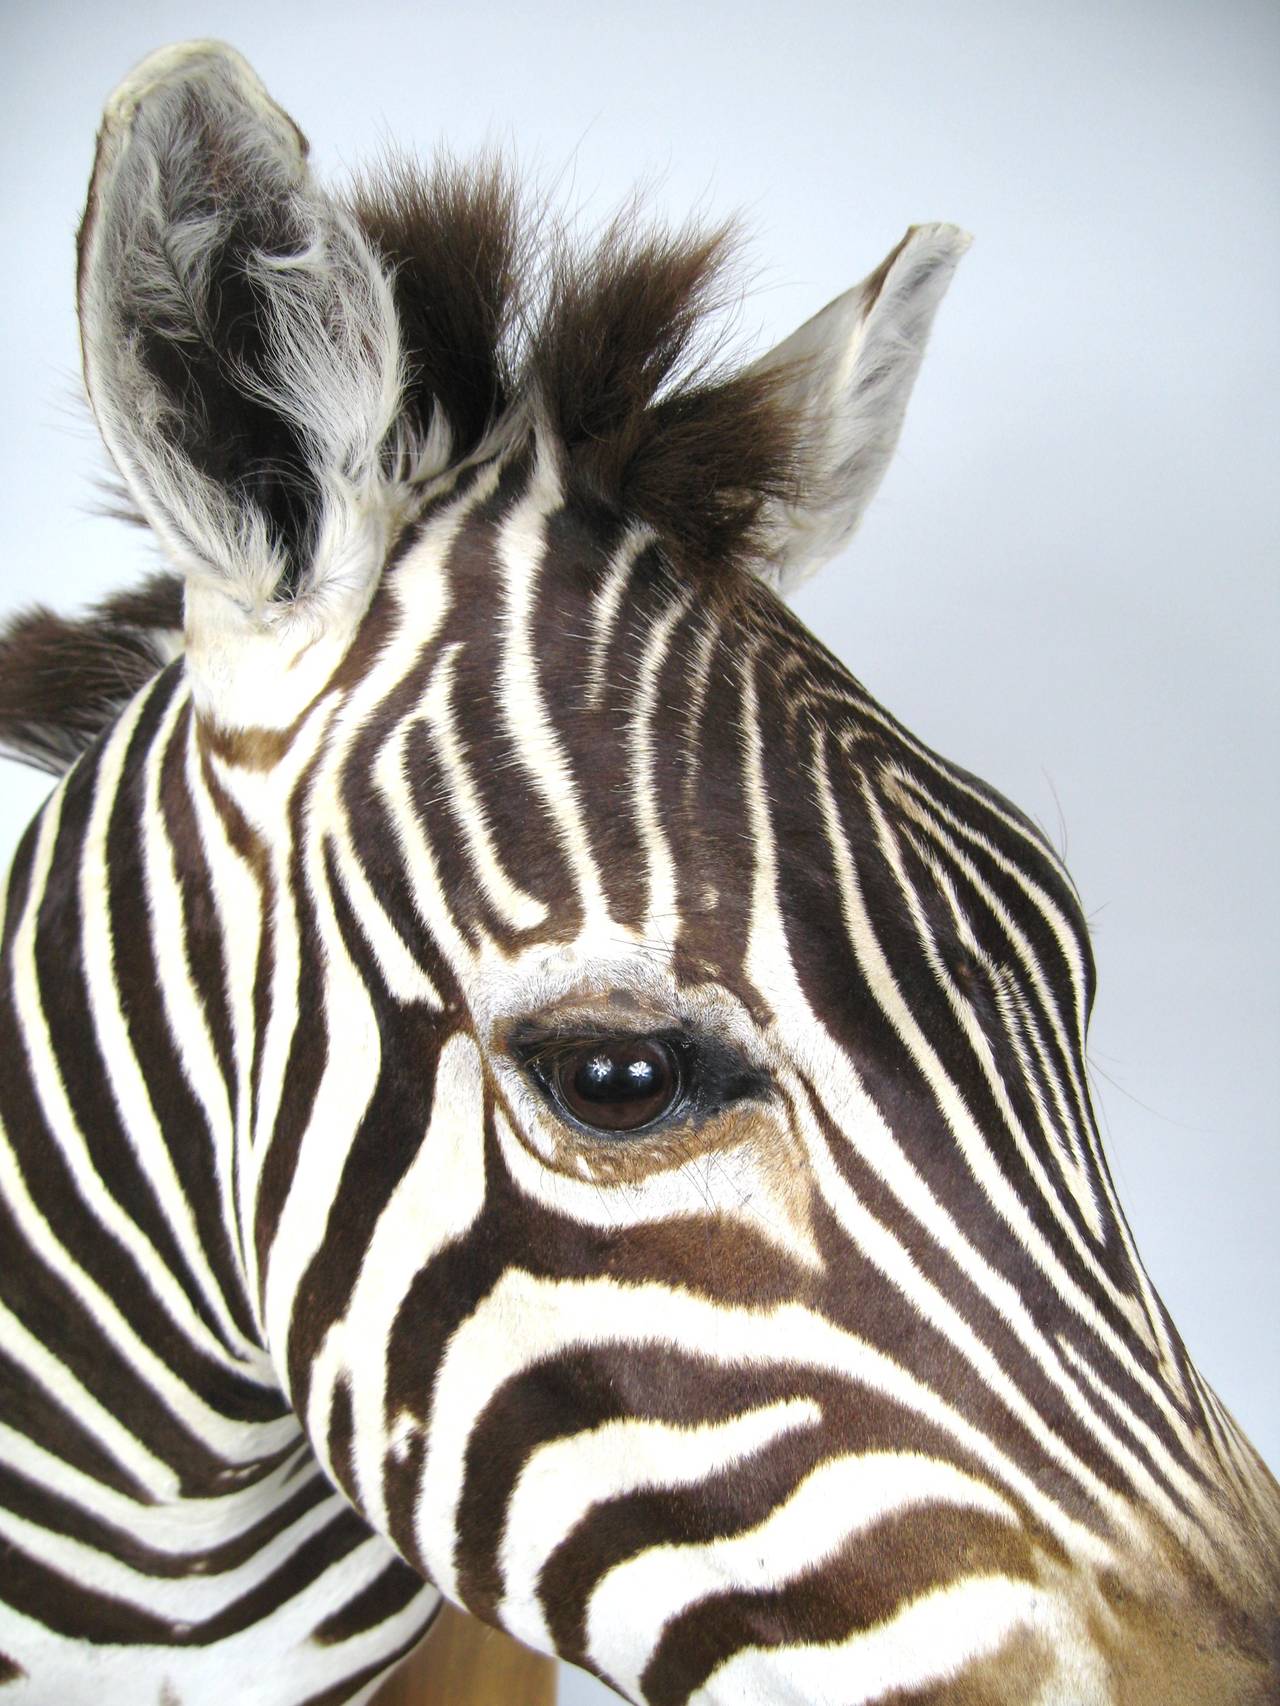 mounted zebra head